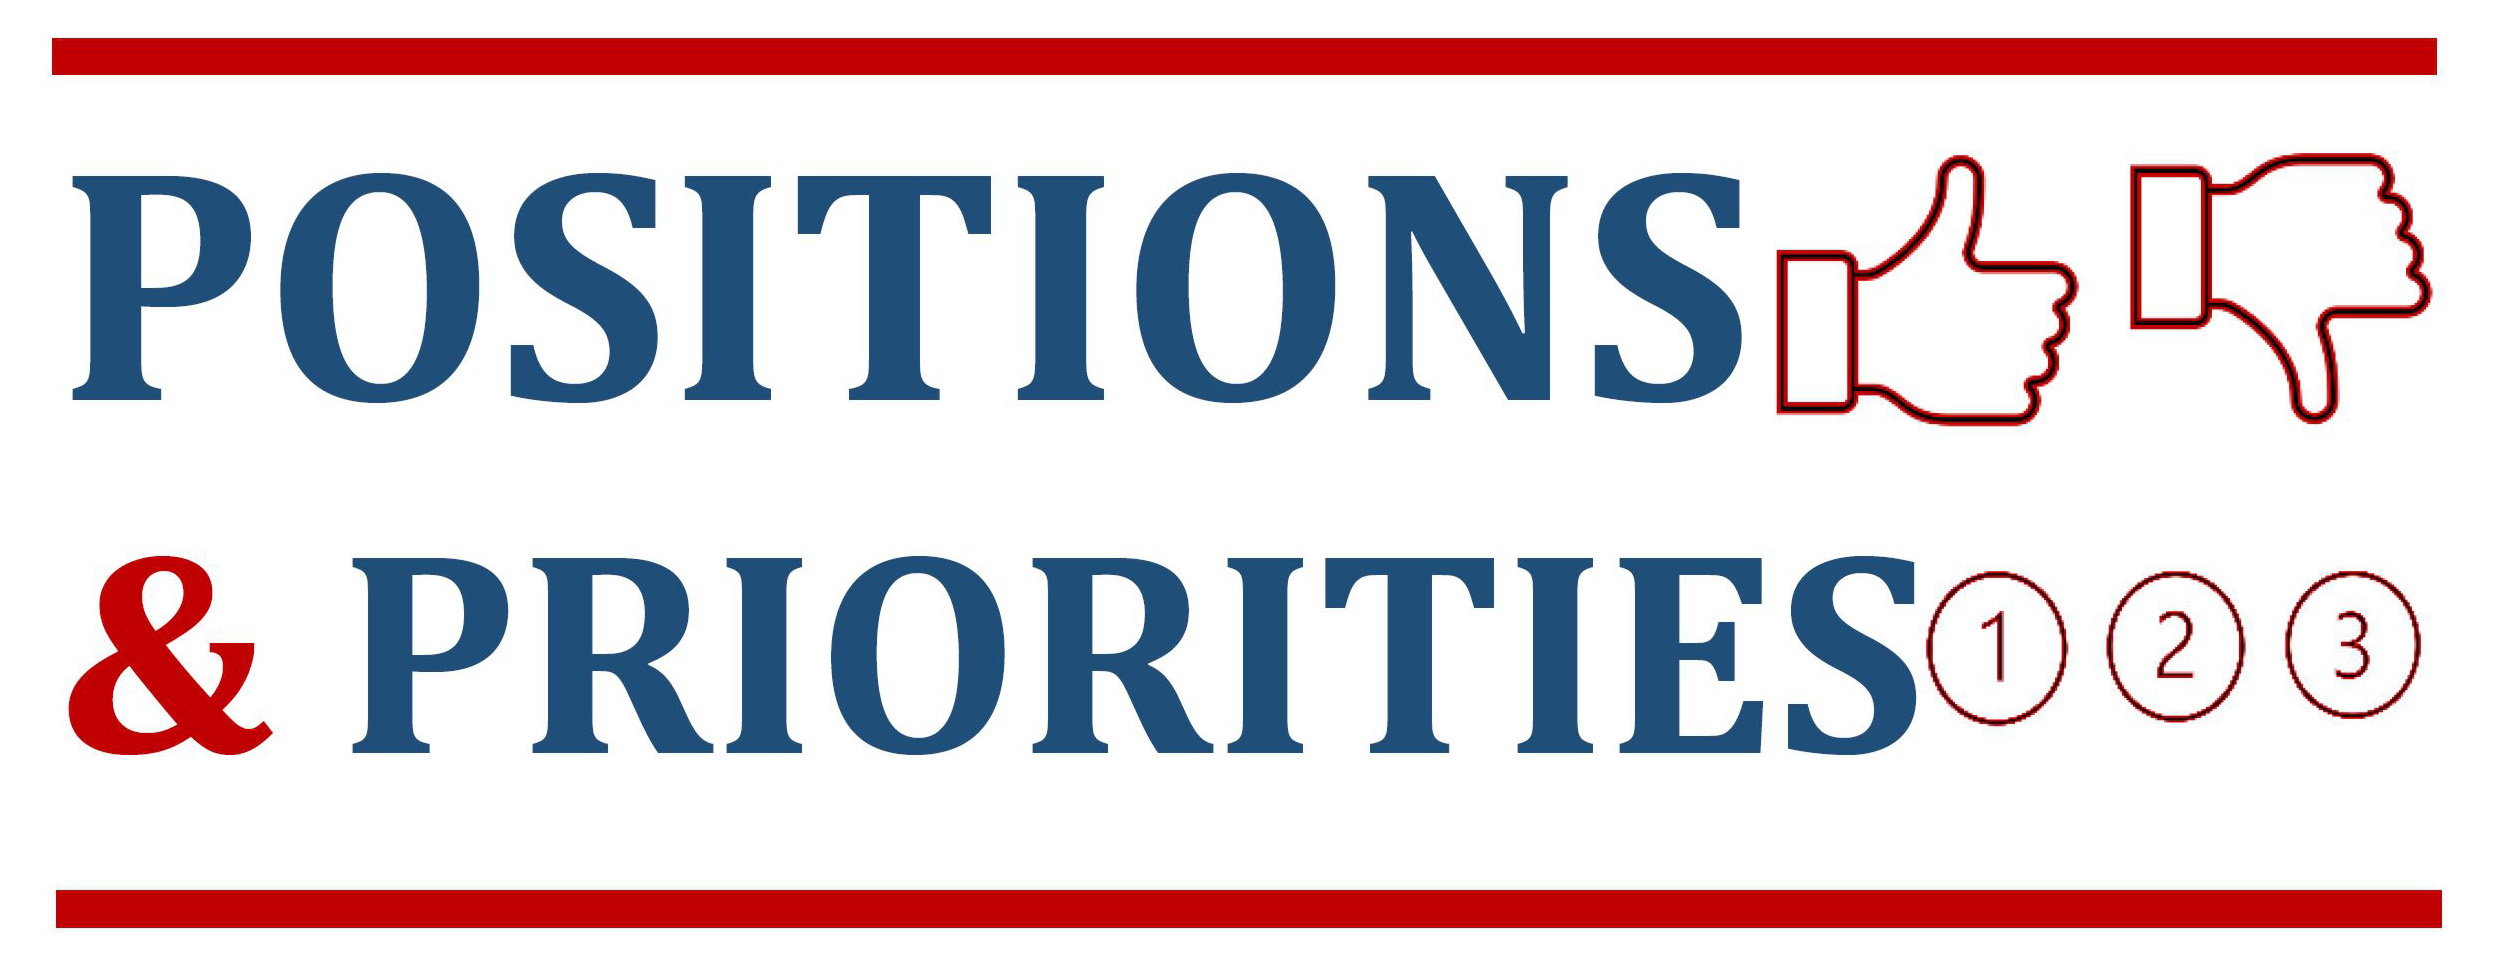 Positions & Priorities logo 2021 - CR